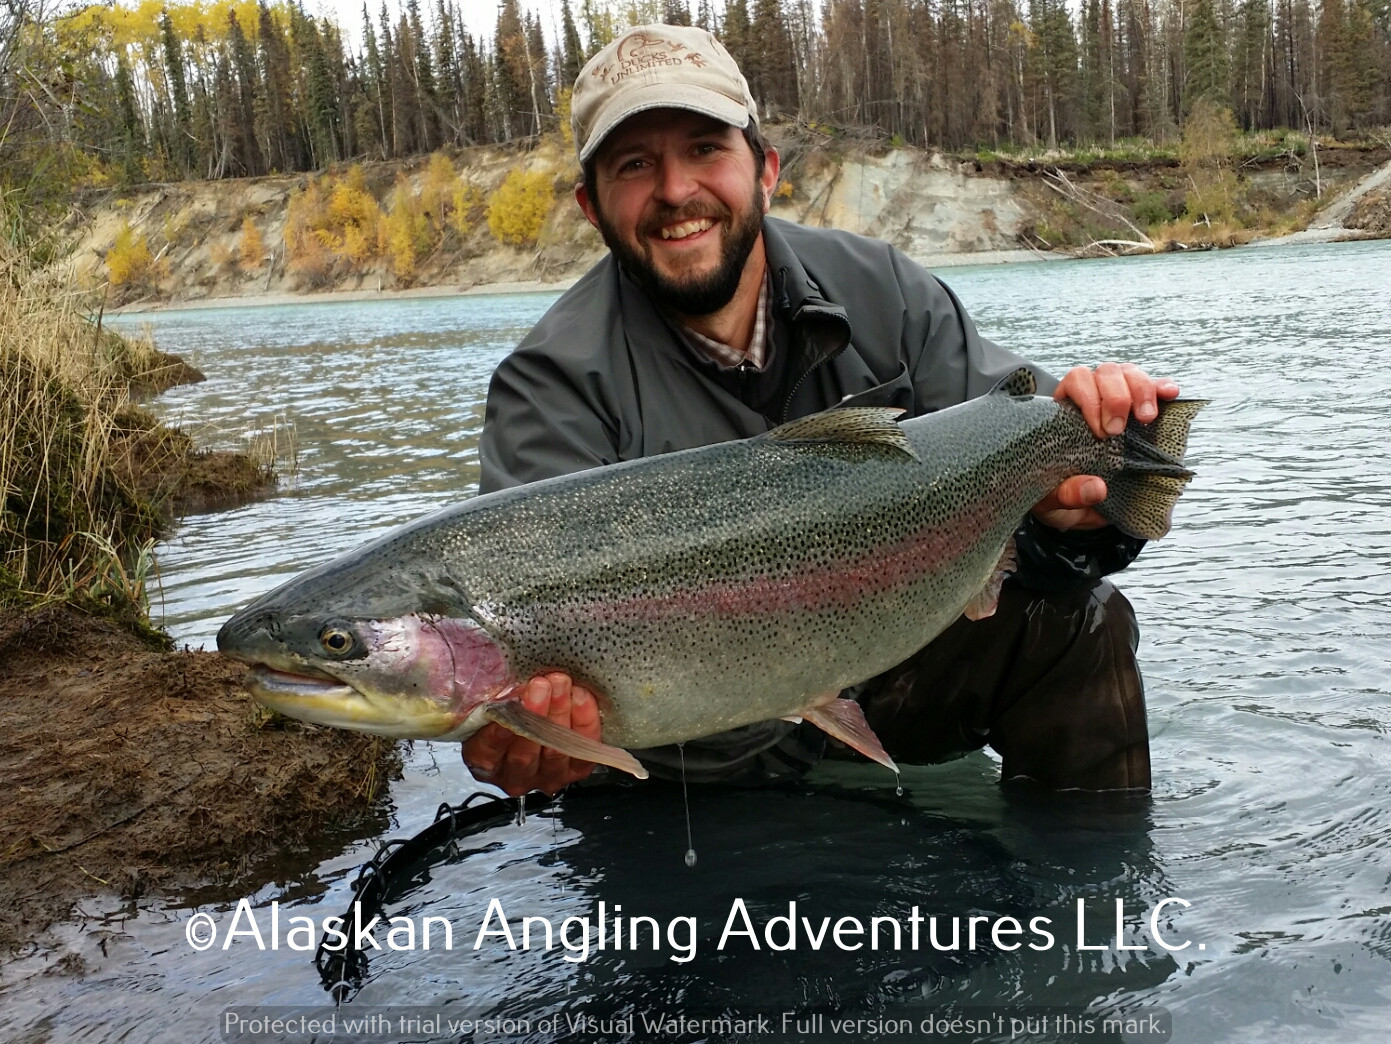 Alaskan Angling Adventures Llc.: Full Day Middle Kenai RiverFishing Trip